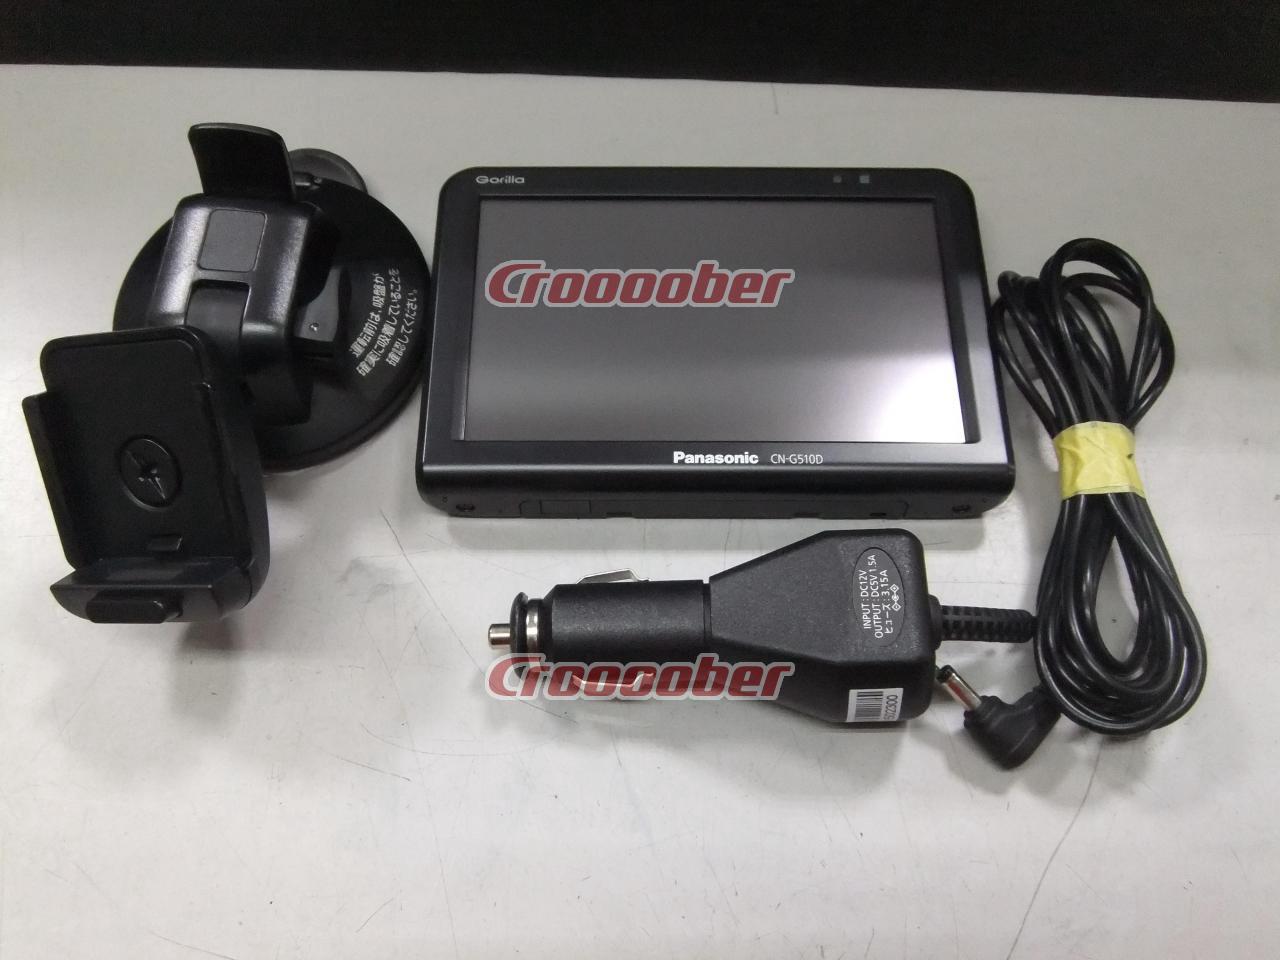 Panasonic Gorilla CN-G510D | Portable Navigation(digital) | Croooober